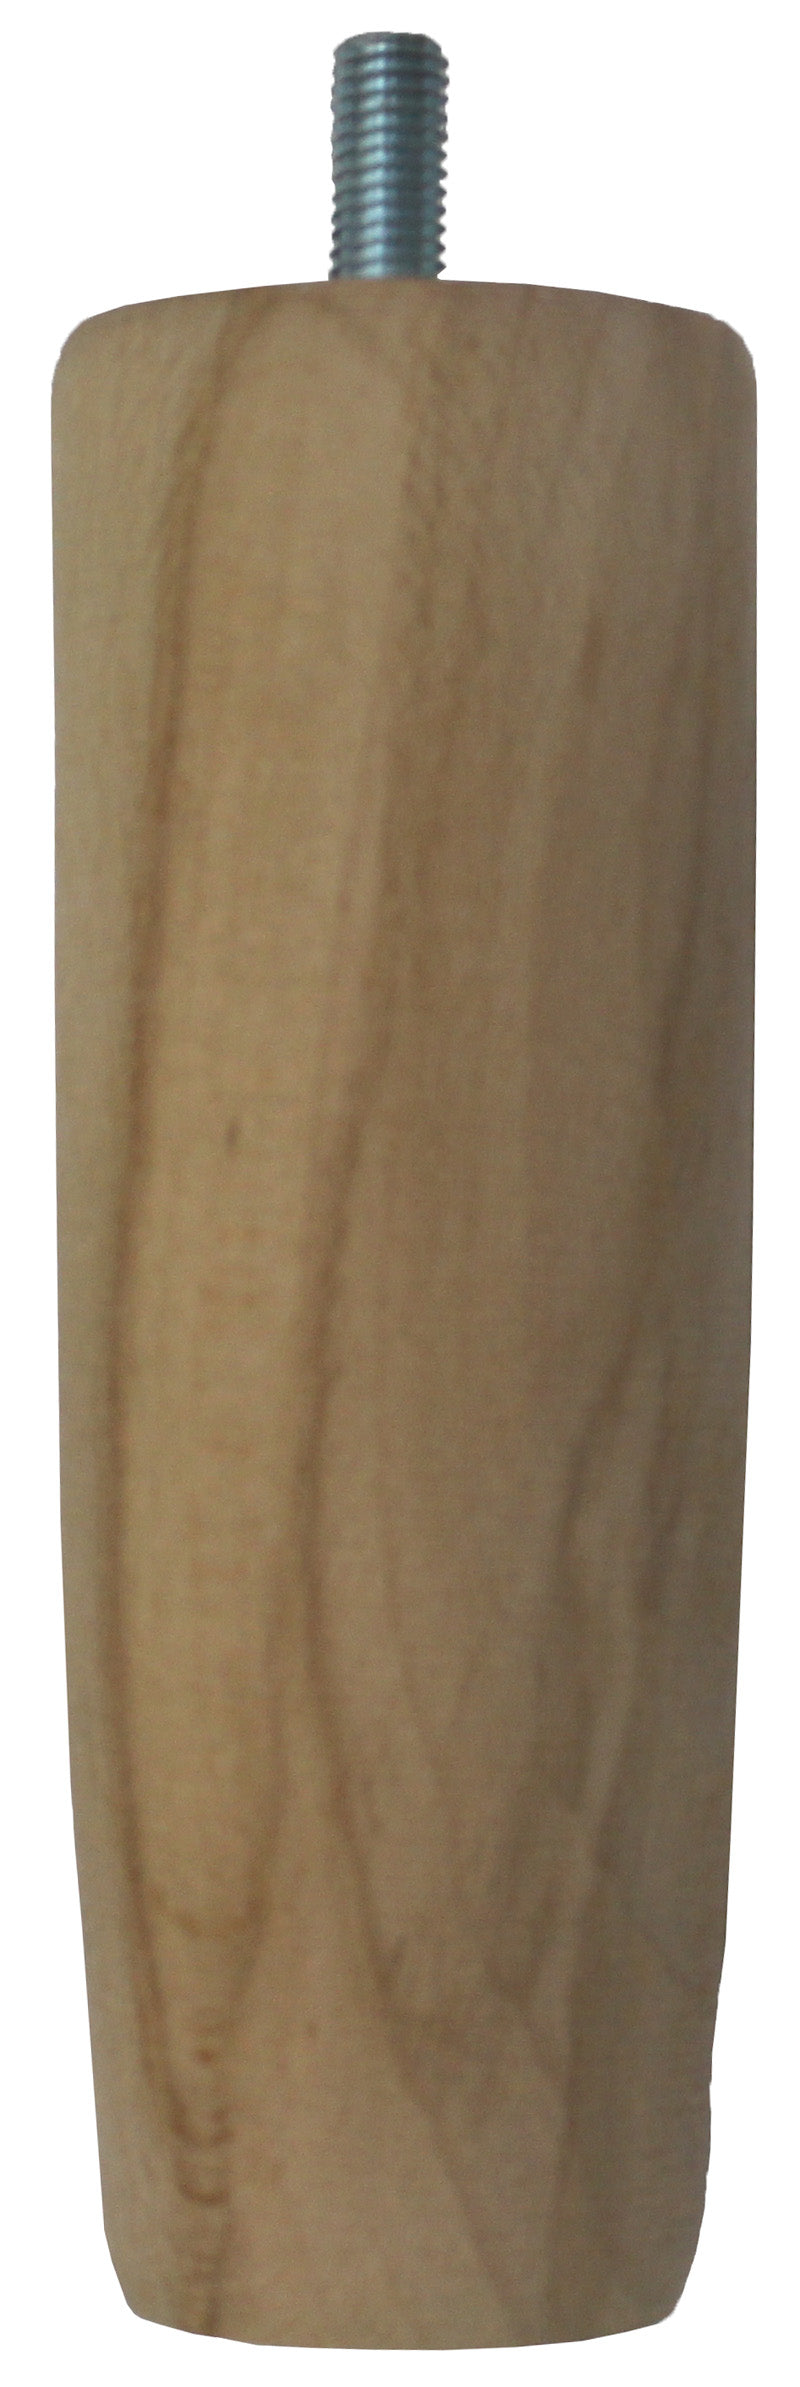 Skylar Wooden Furniture Legs - Raw Finish - Set of 4